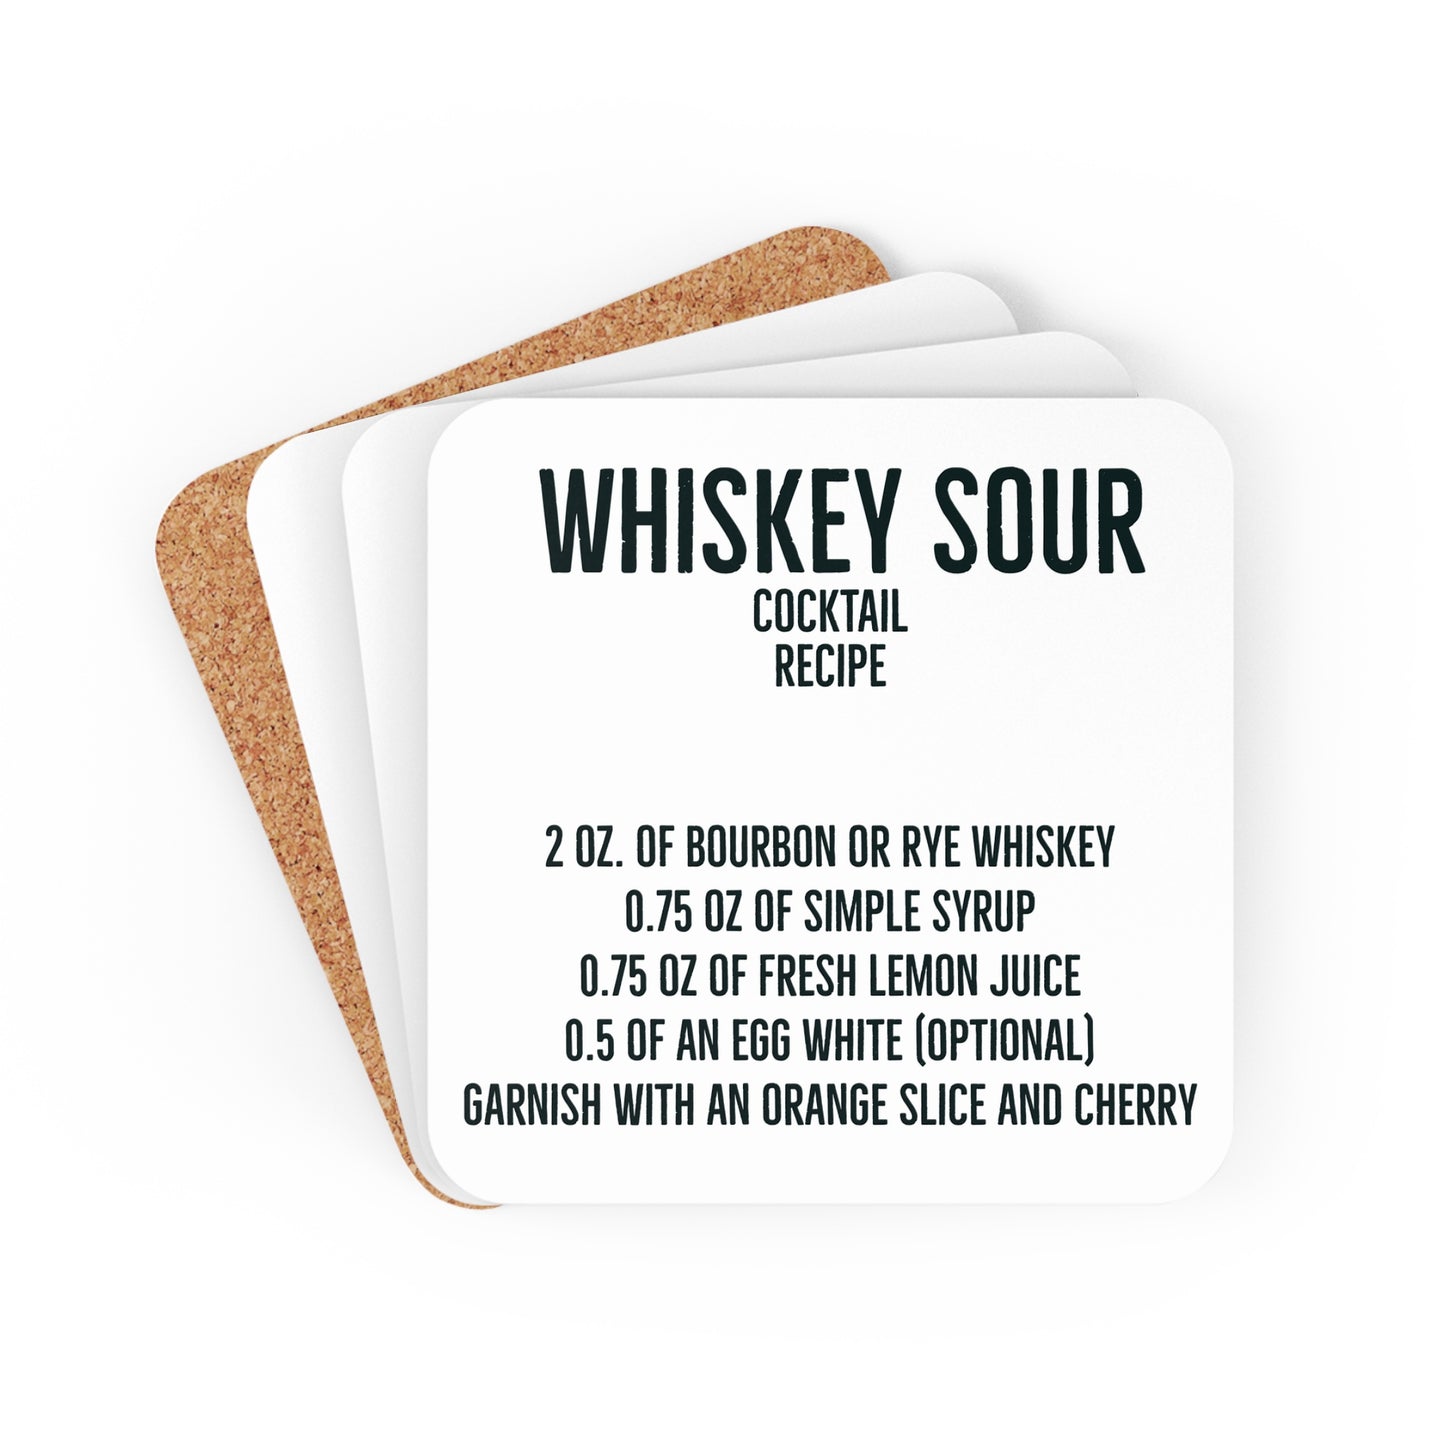 Whiskey Sour Bourbon Cocktail Recipe Coaster Set mens gift bar housewarming hostess gift